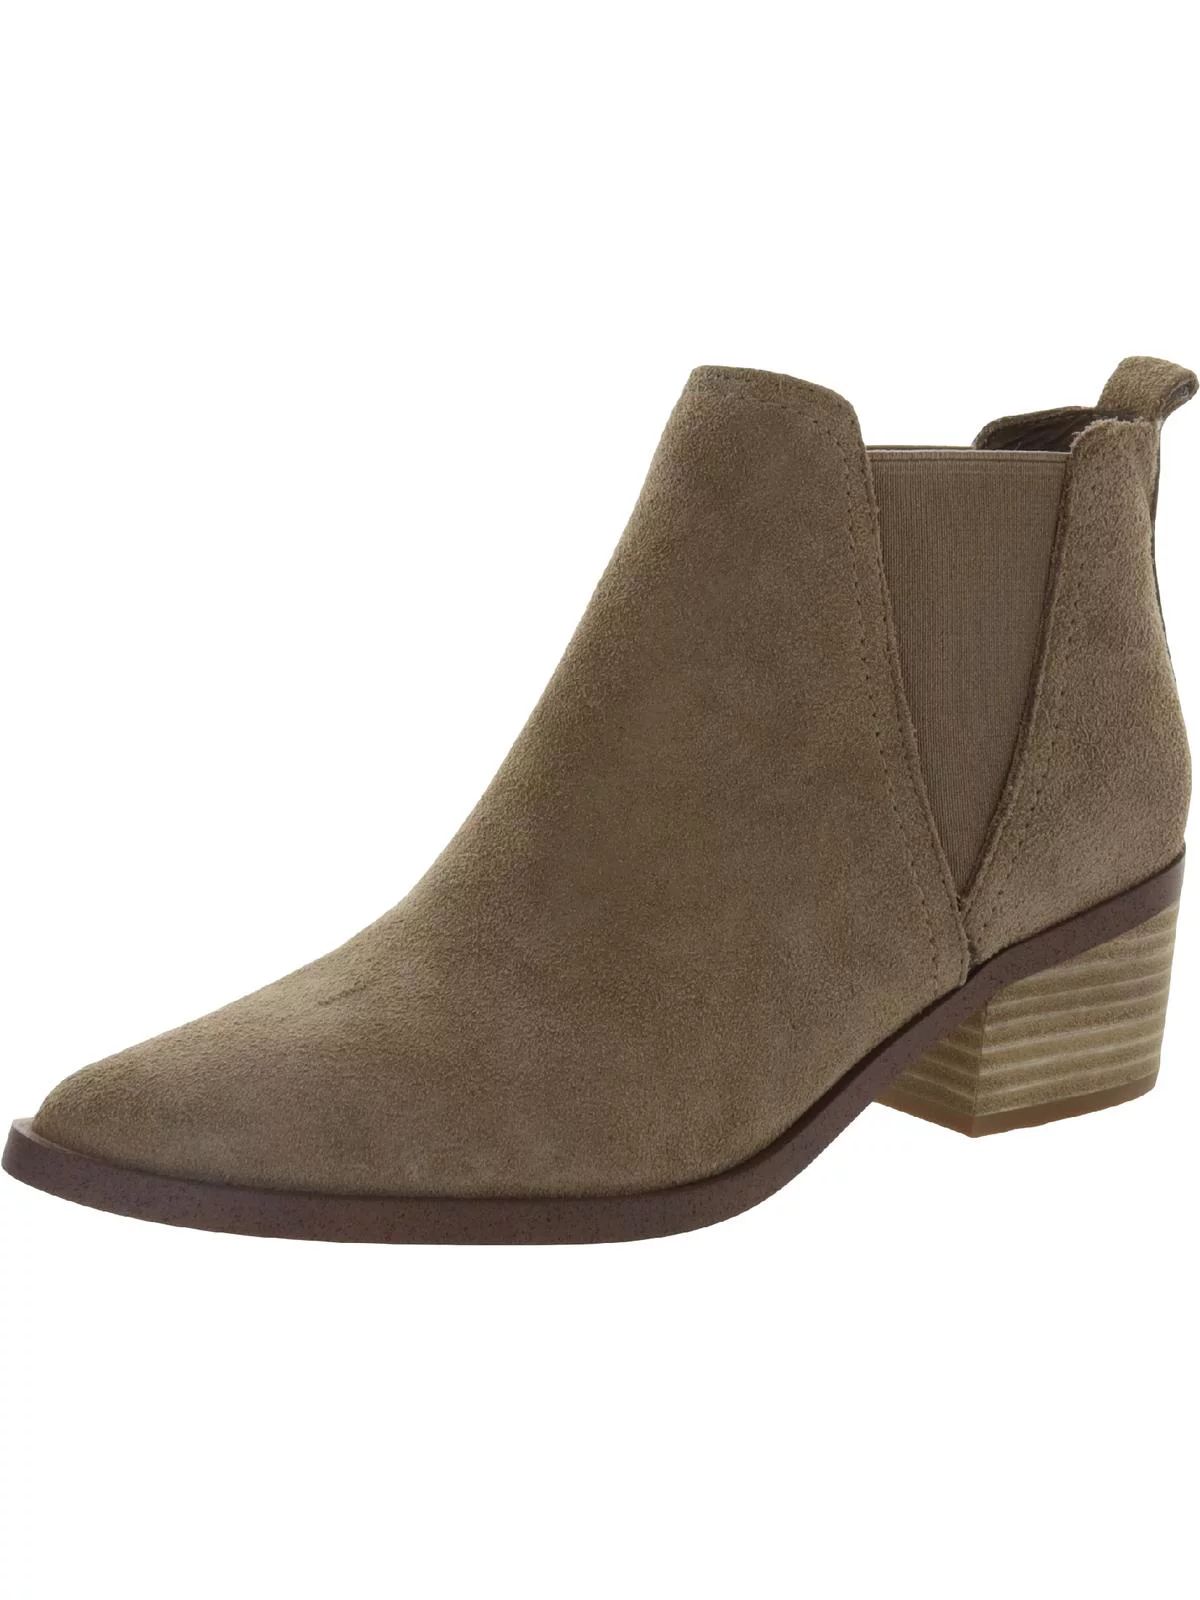 Dolce Vita Womens Zipporah Leather Chelsea Boots Taupe 10 Medium (B,M) | Walmart (US)